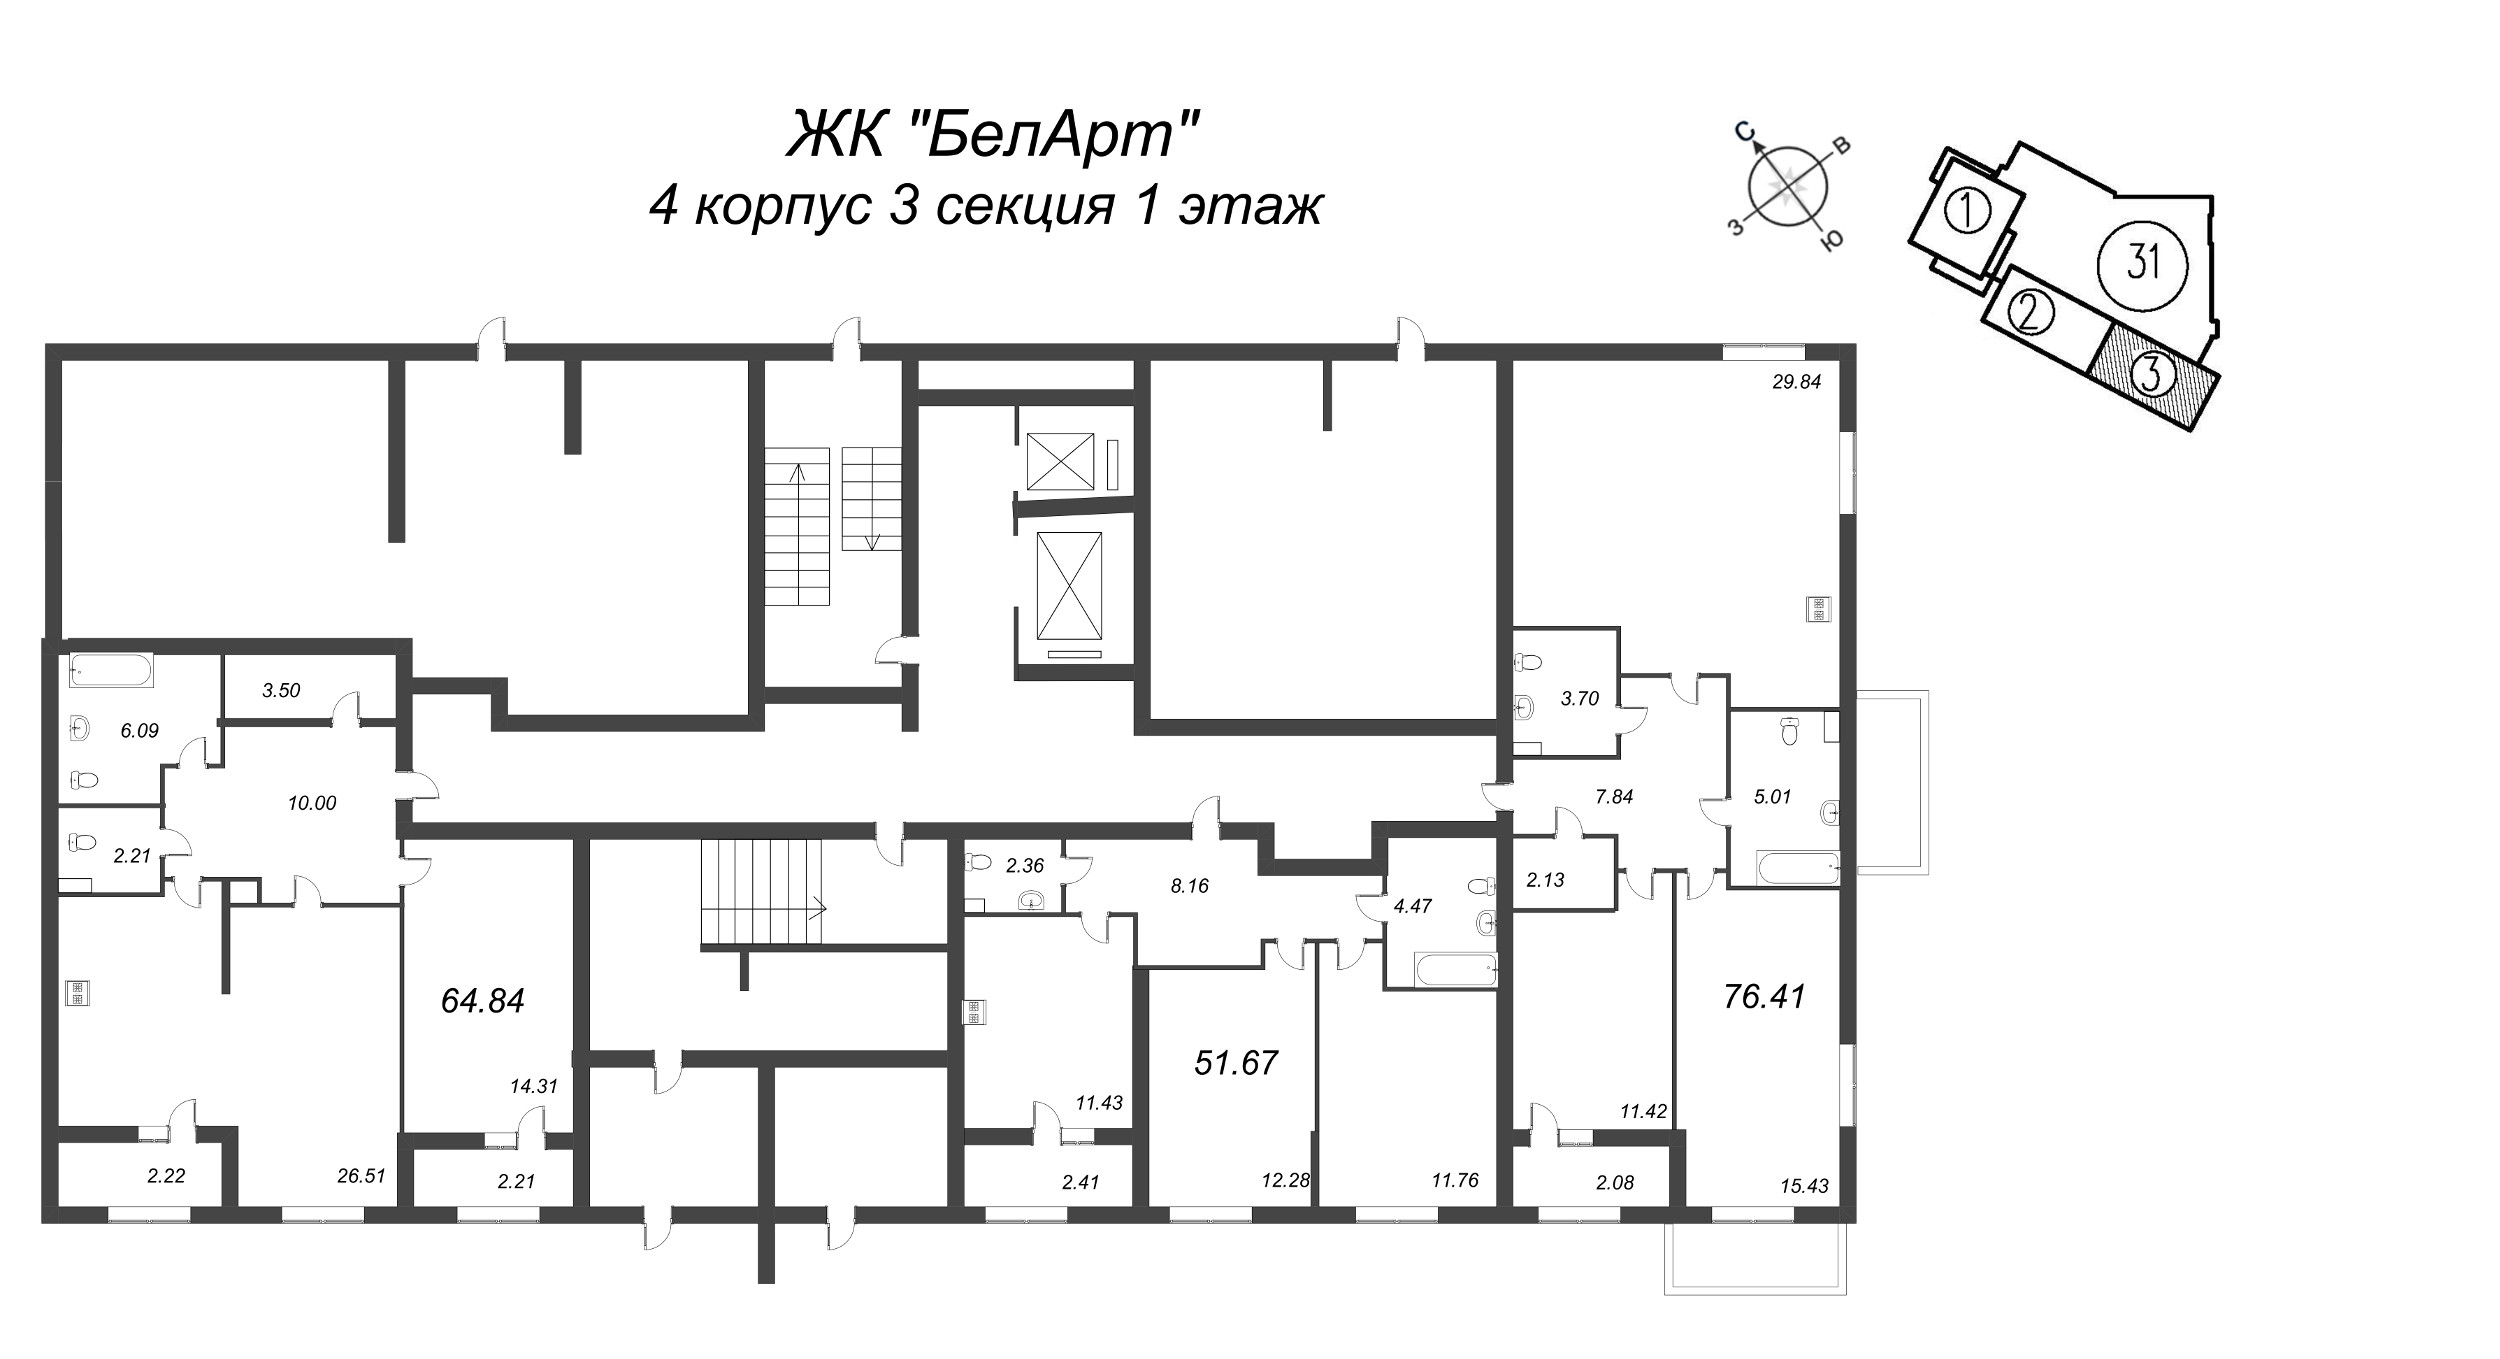 2-комнатная (Евро) квартира, 64.84 м² - планировка этажа